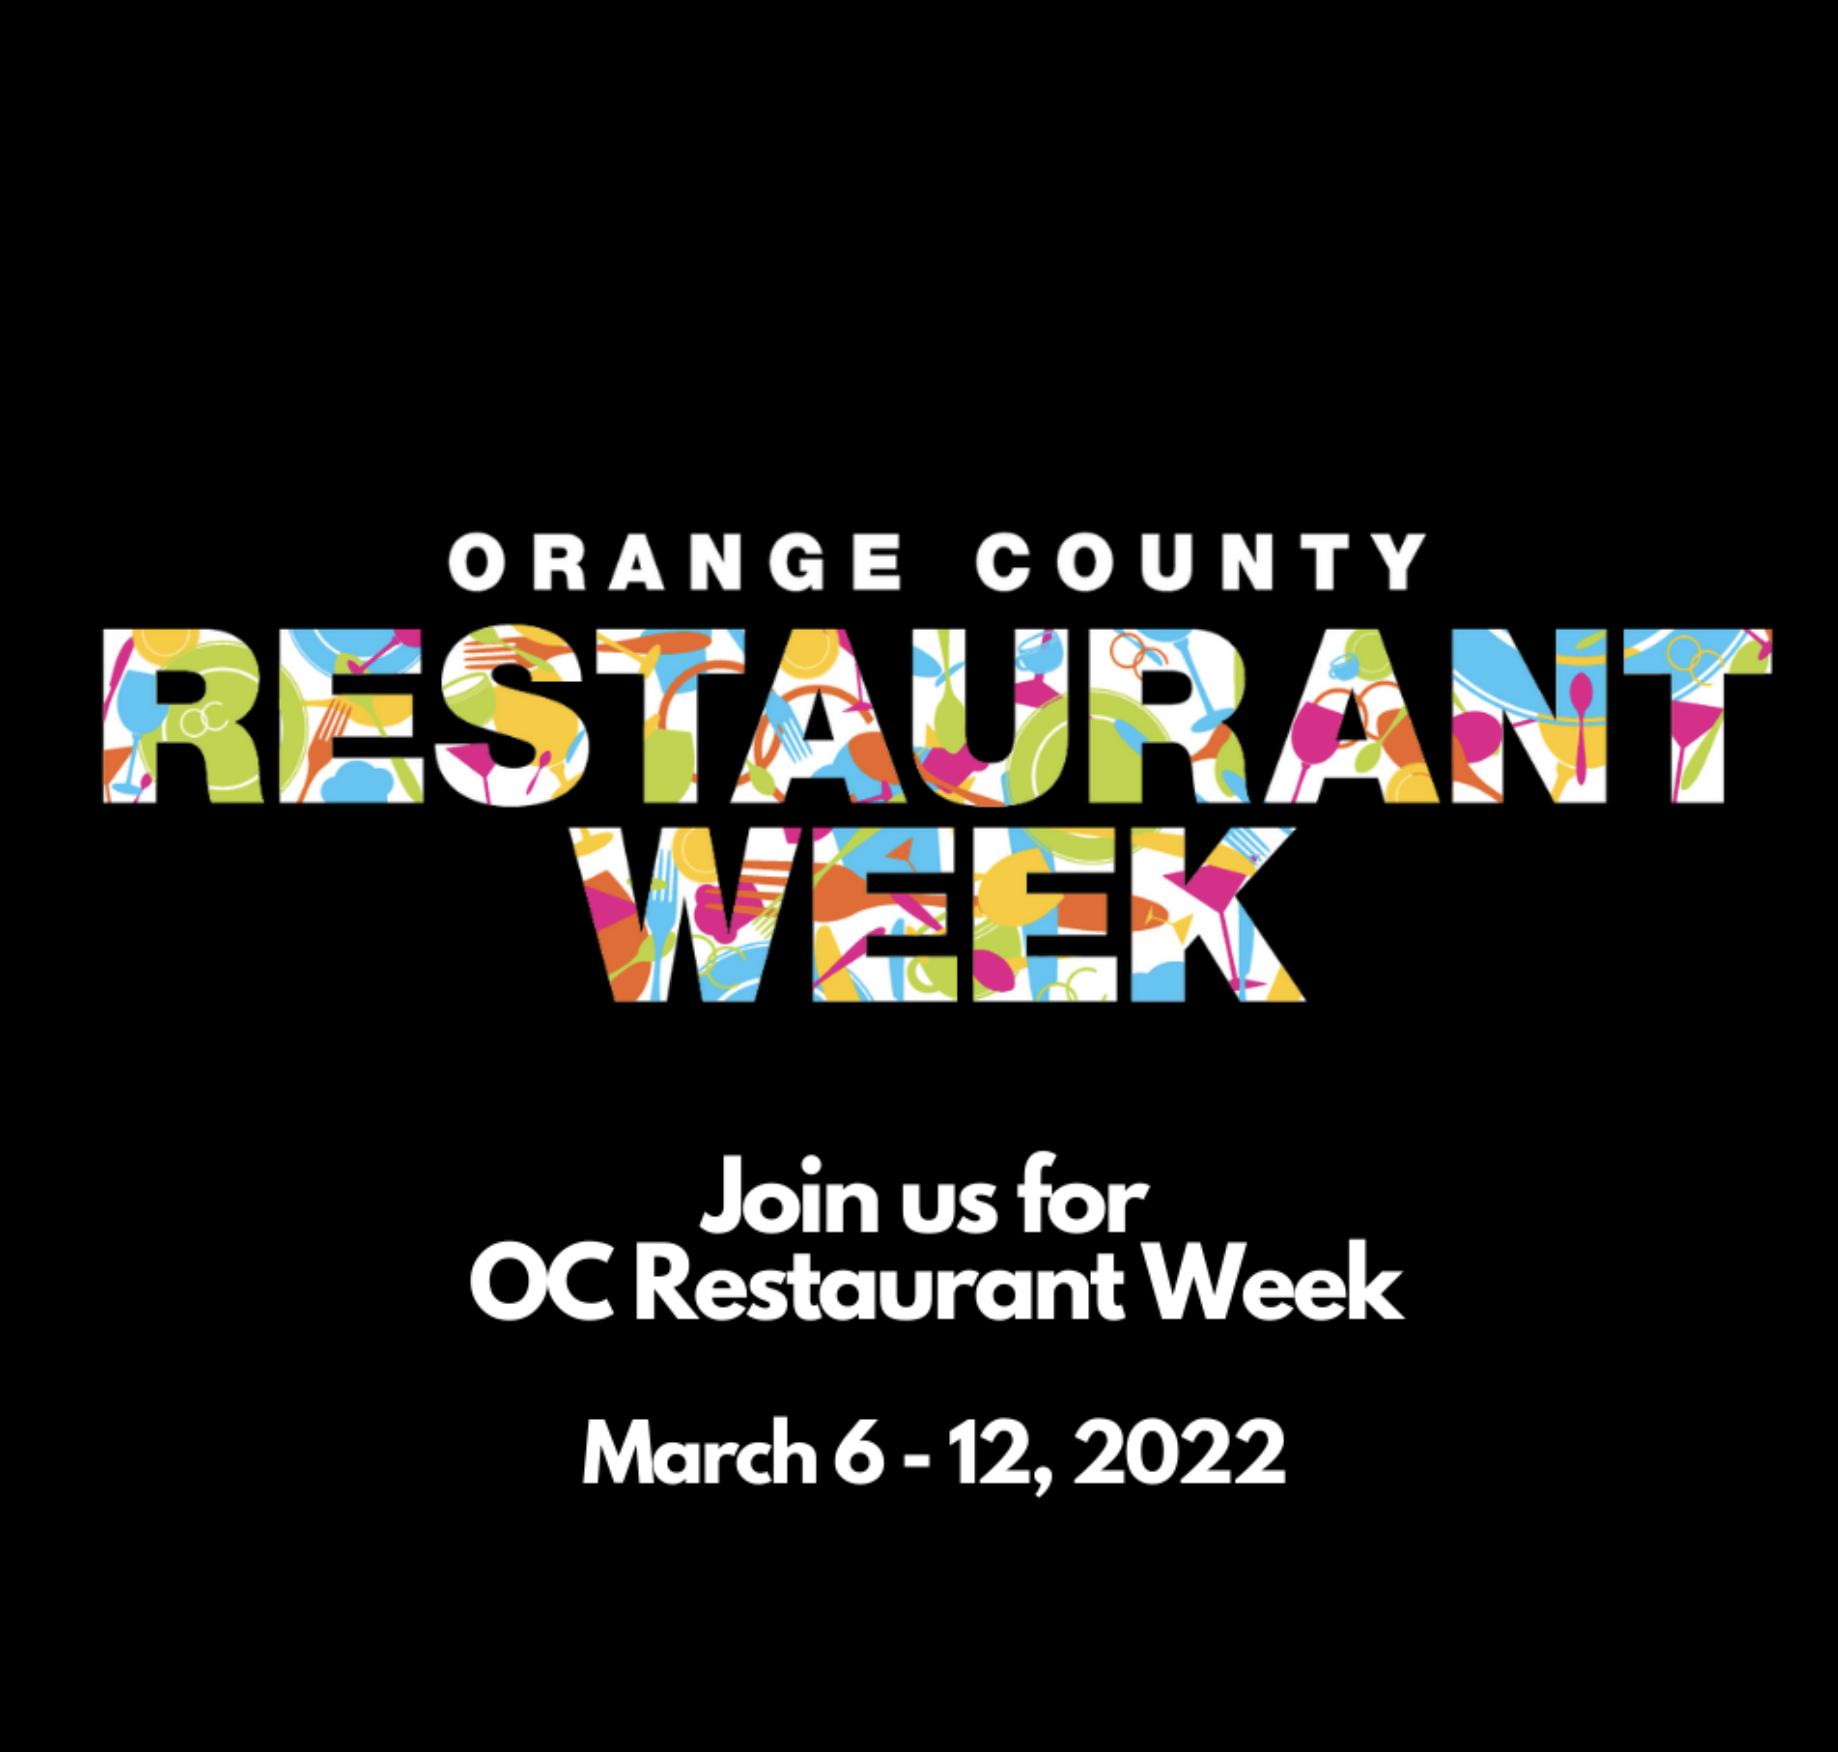 Cucina Enoteca Events - Oc Restaurant Week Newport Beach